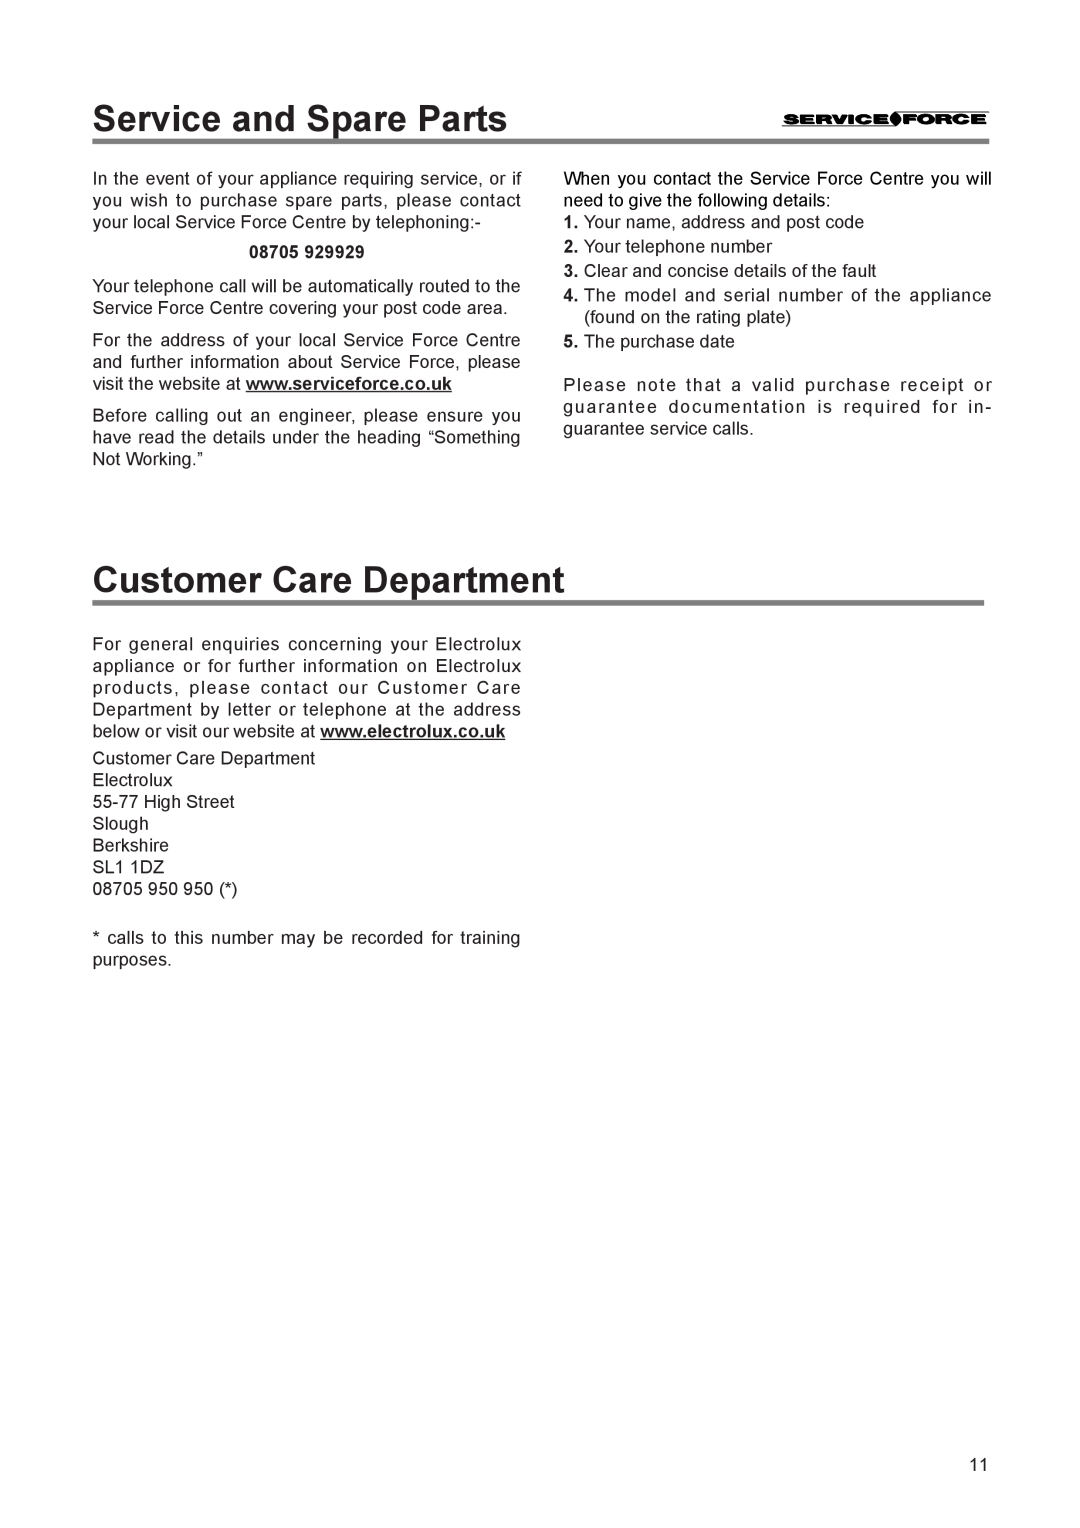 Electrolux EUN 1272 manual Service and Spare Parts, Customer Care Department 